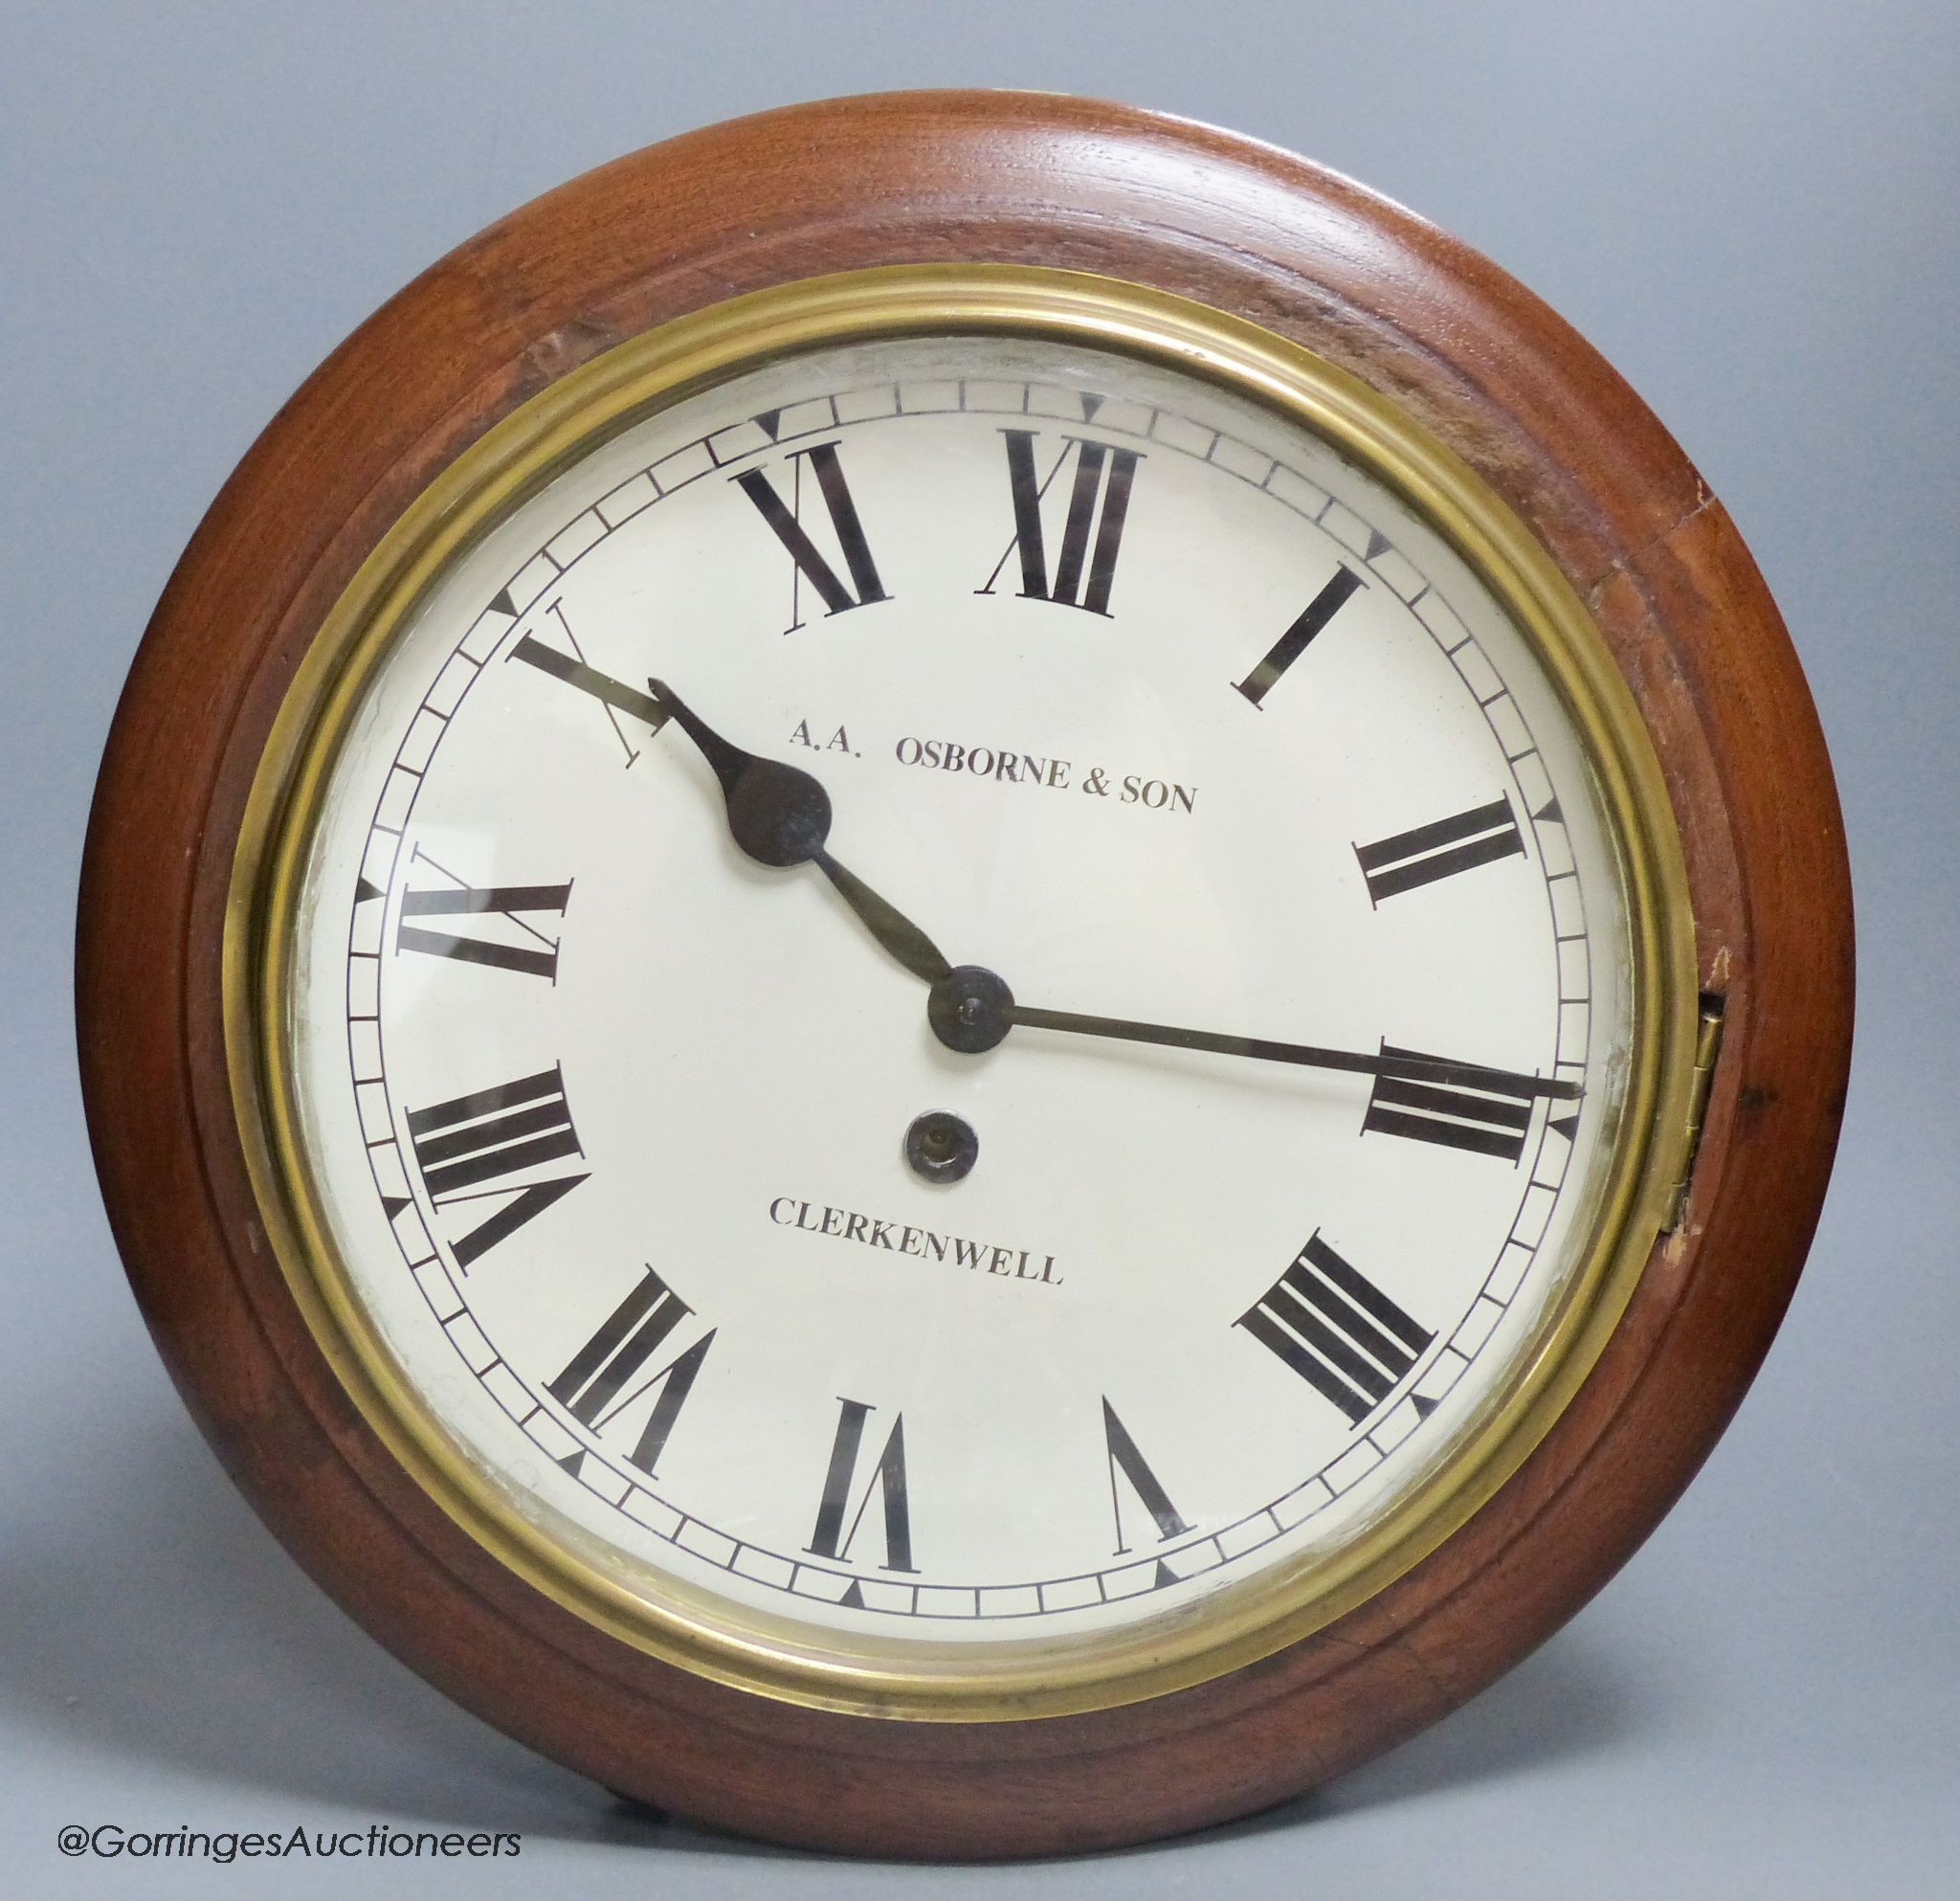 An early 20th century mahogany cased wall clock, A.A. Osborne & Son, diameter 40cm